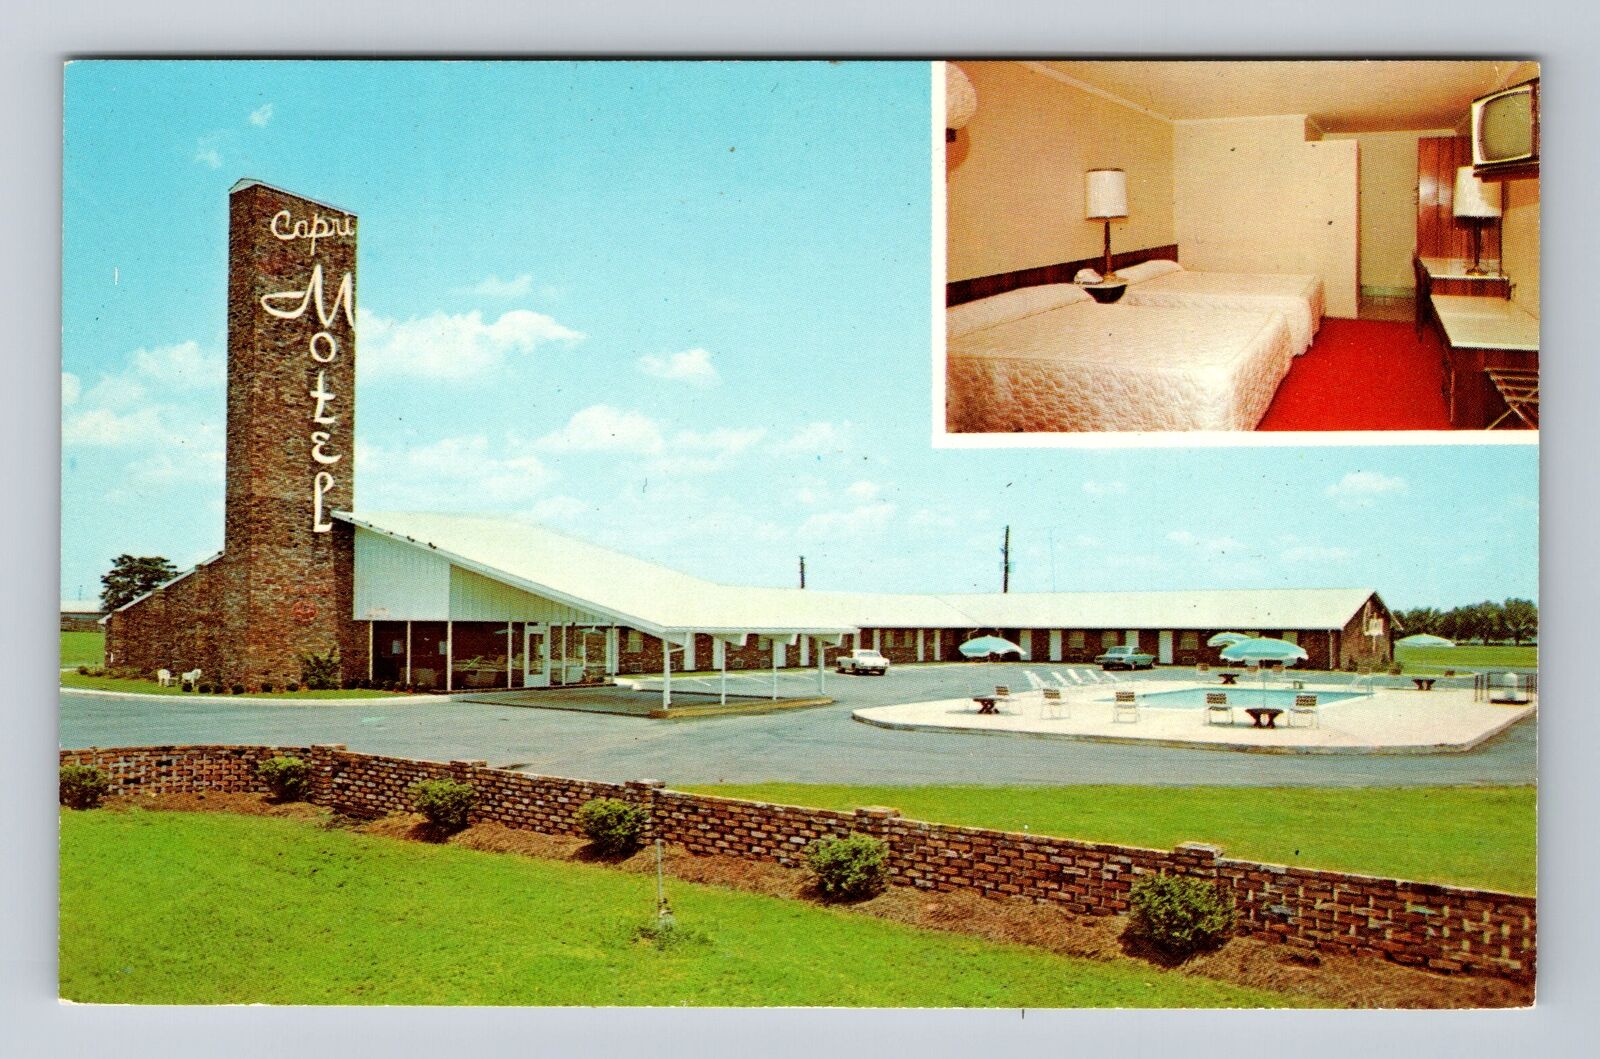 Perry GA-Georgia, Capri Motel, Advertising, Antique Souvenir Vintage Postcard